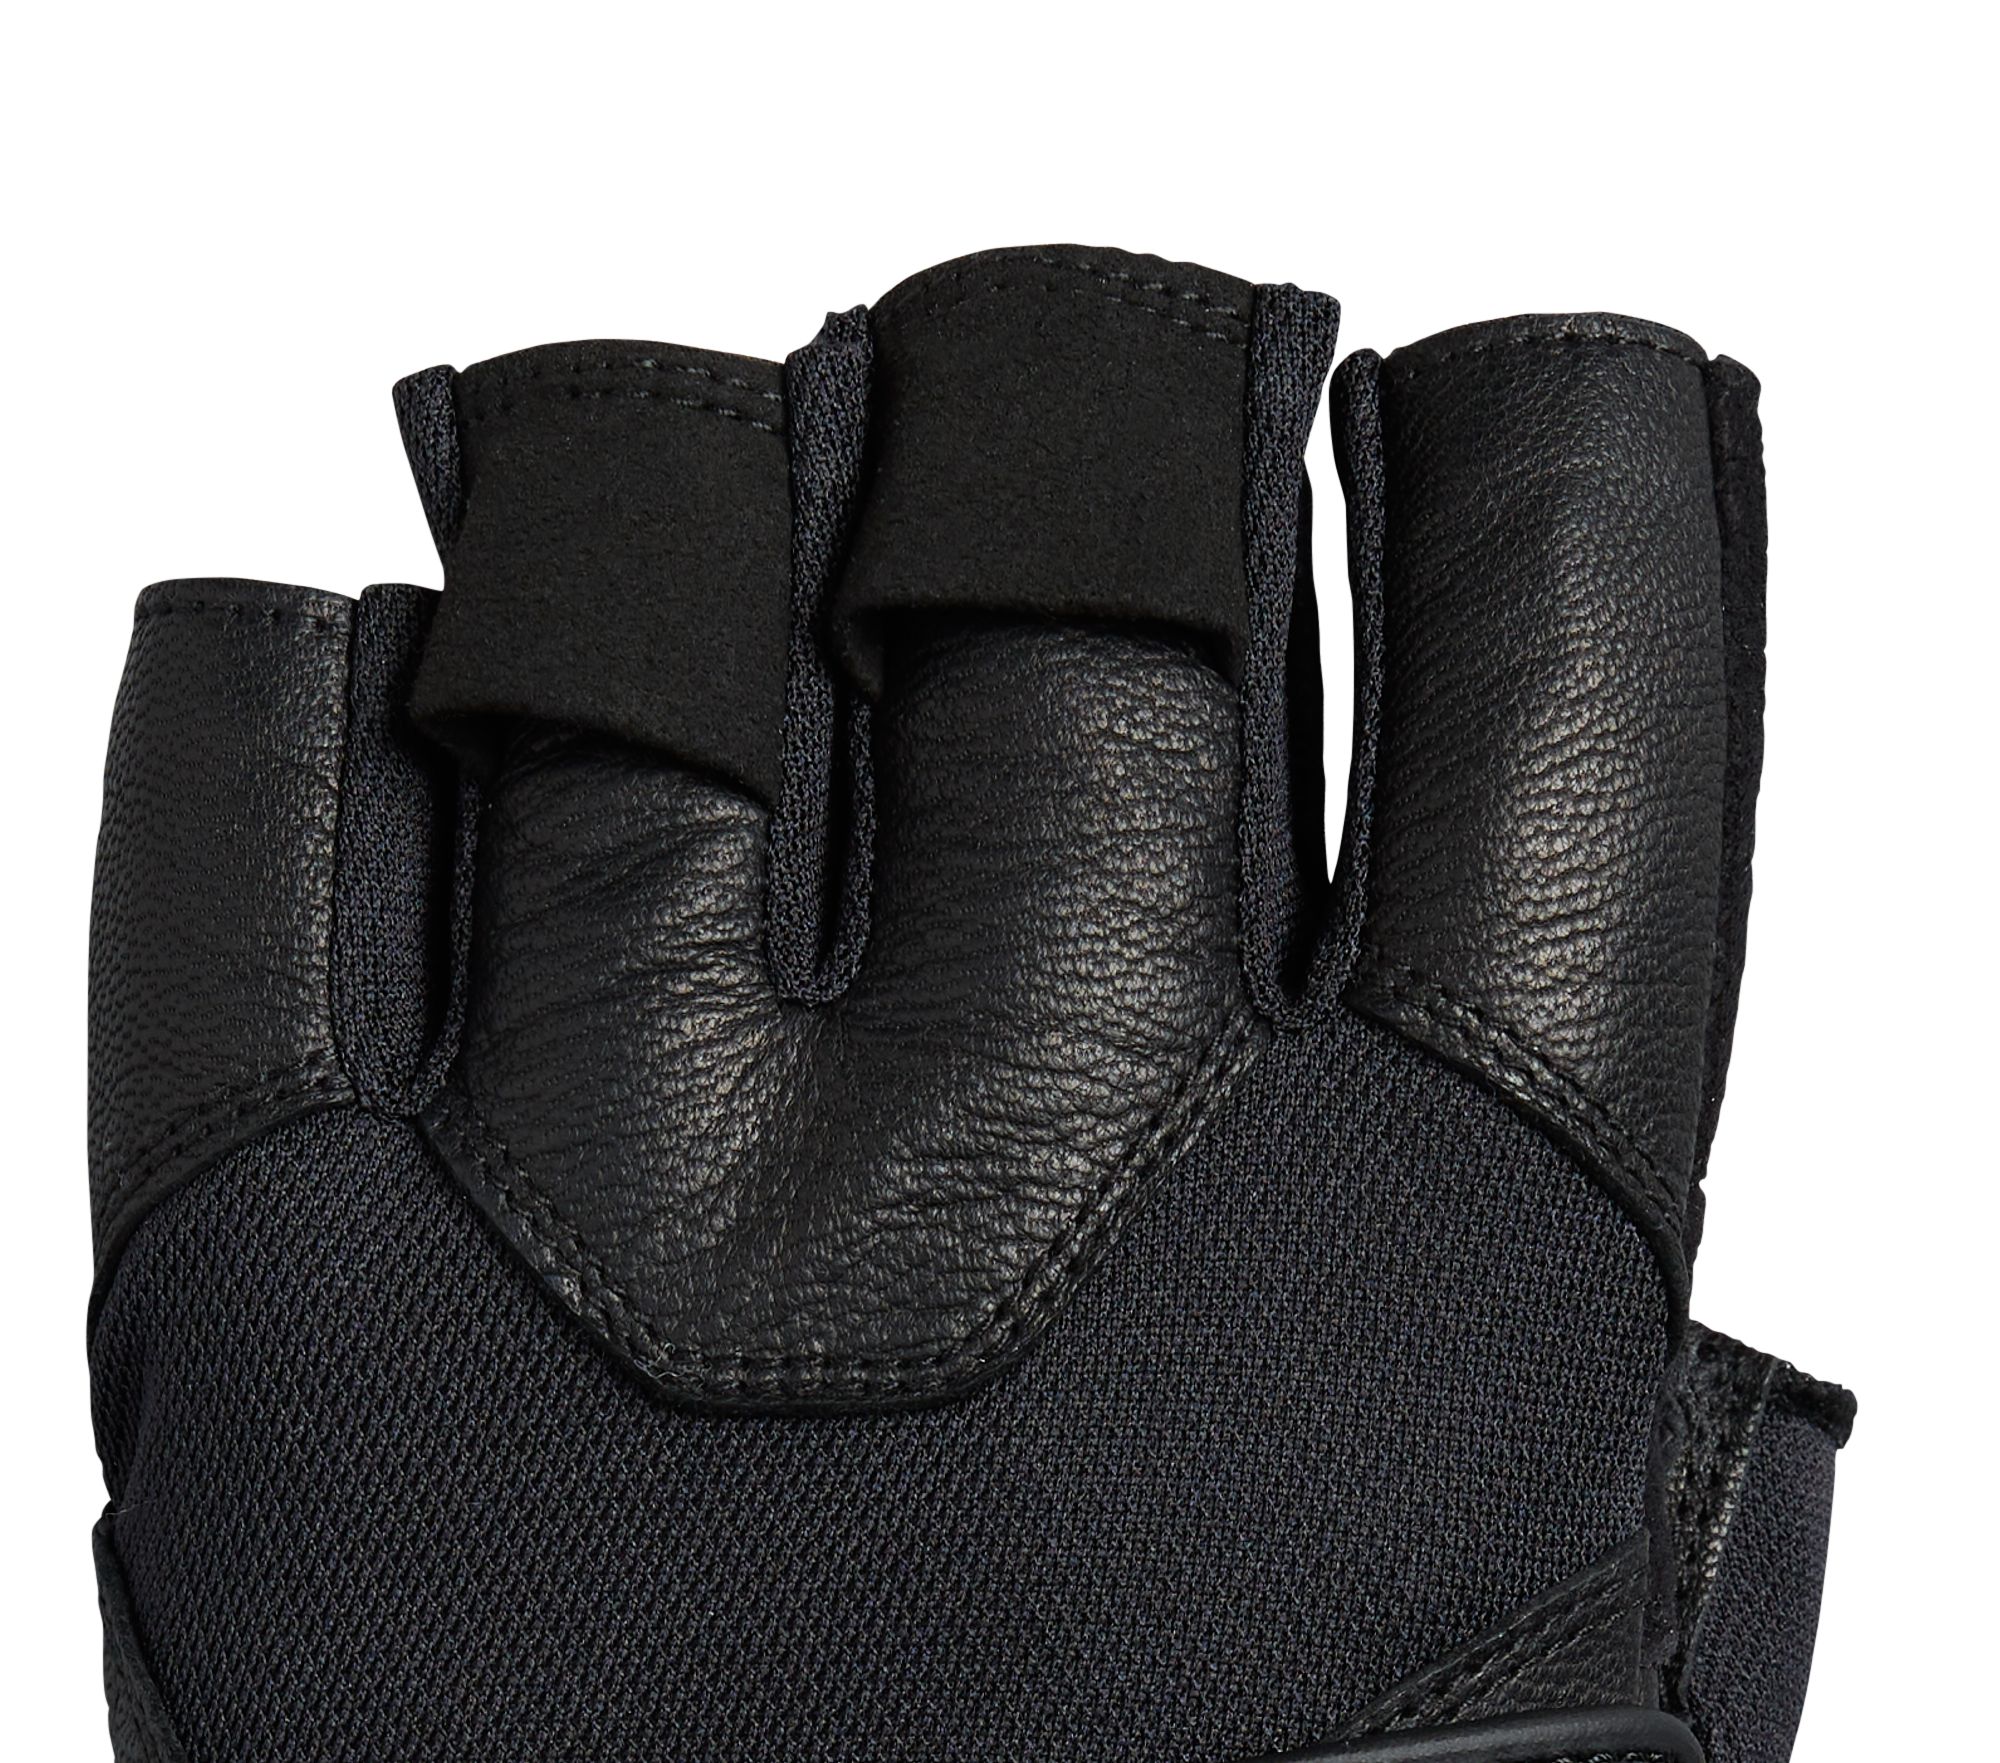 ETHOS Men's Maxus+ Leather Lifting Glove with Wrist Wrap